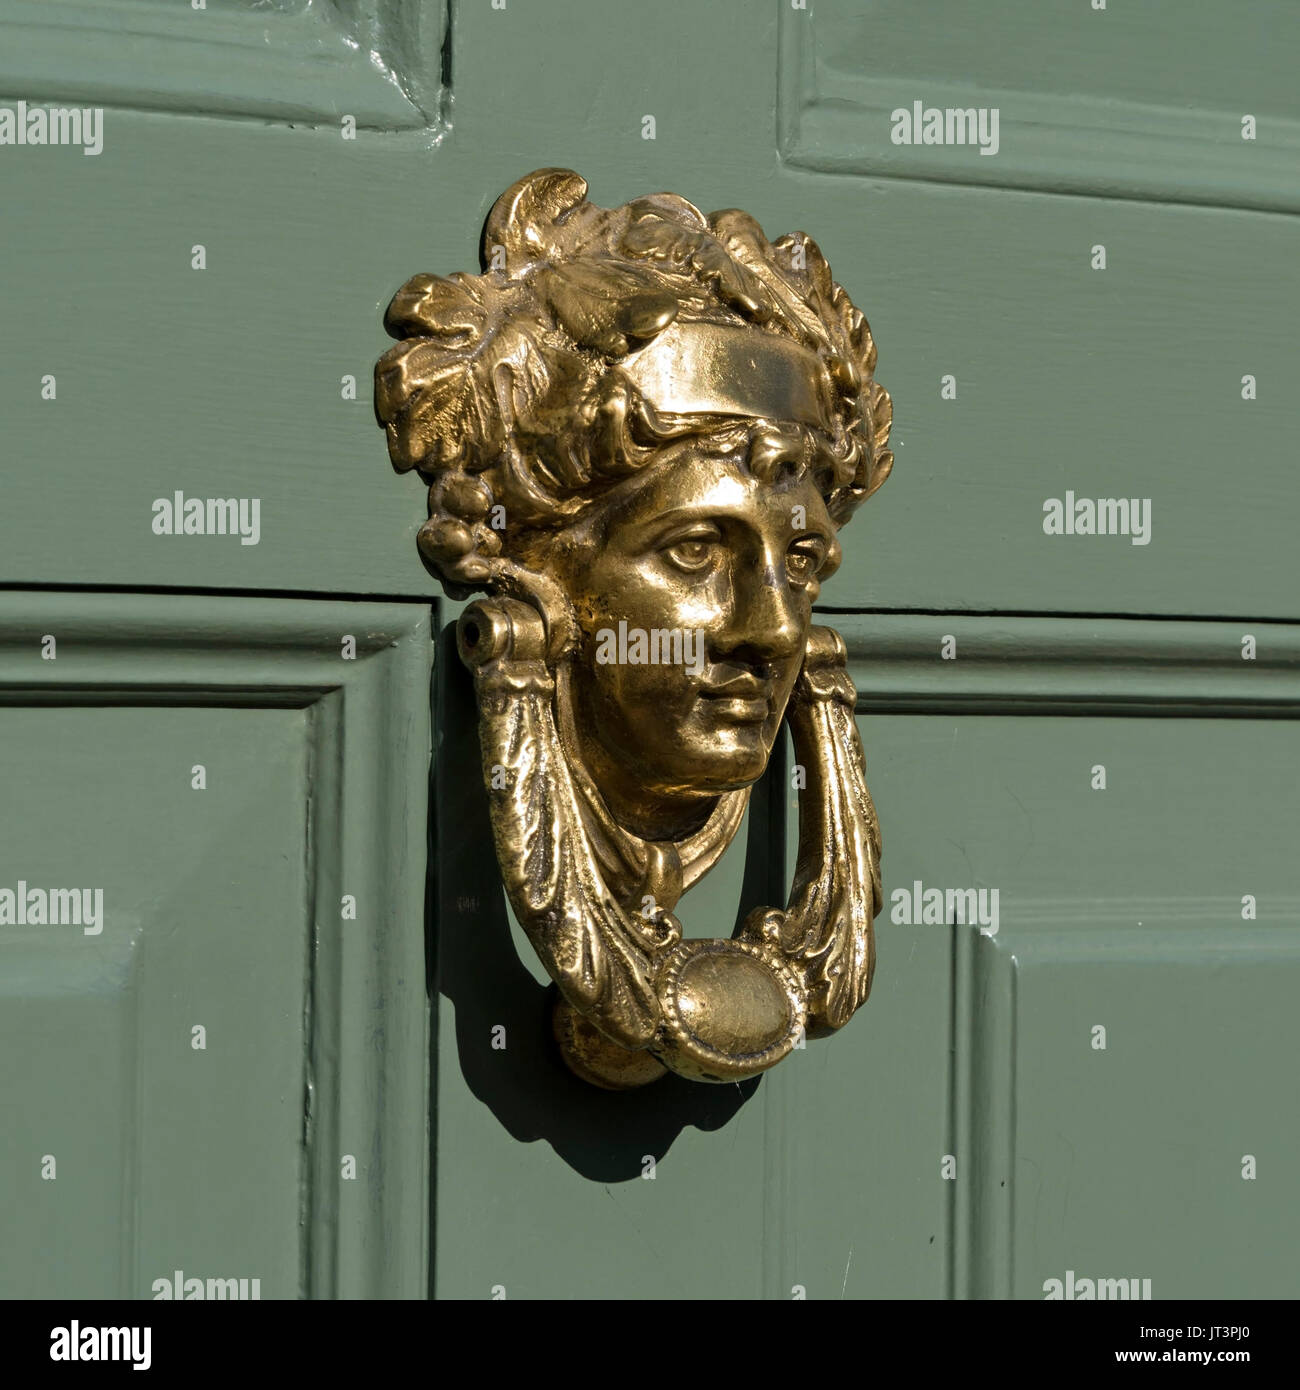 Smart golden polished brass door knocker depicting Roman goddess Apollo, on green painted wooden panelled front door. Stock Photo